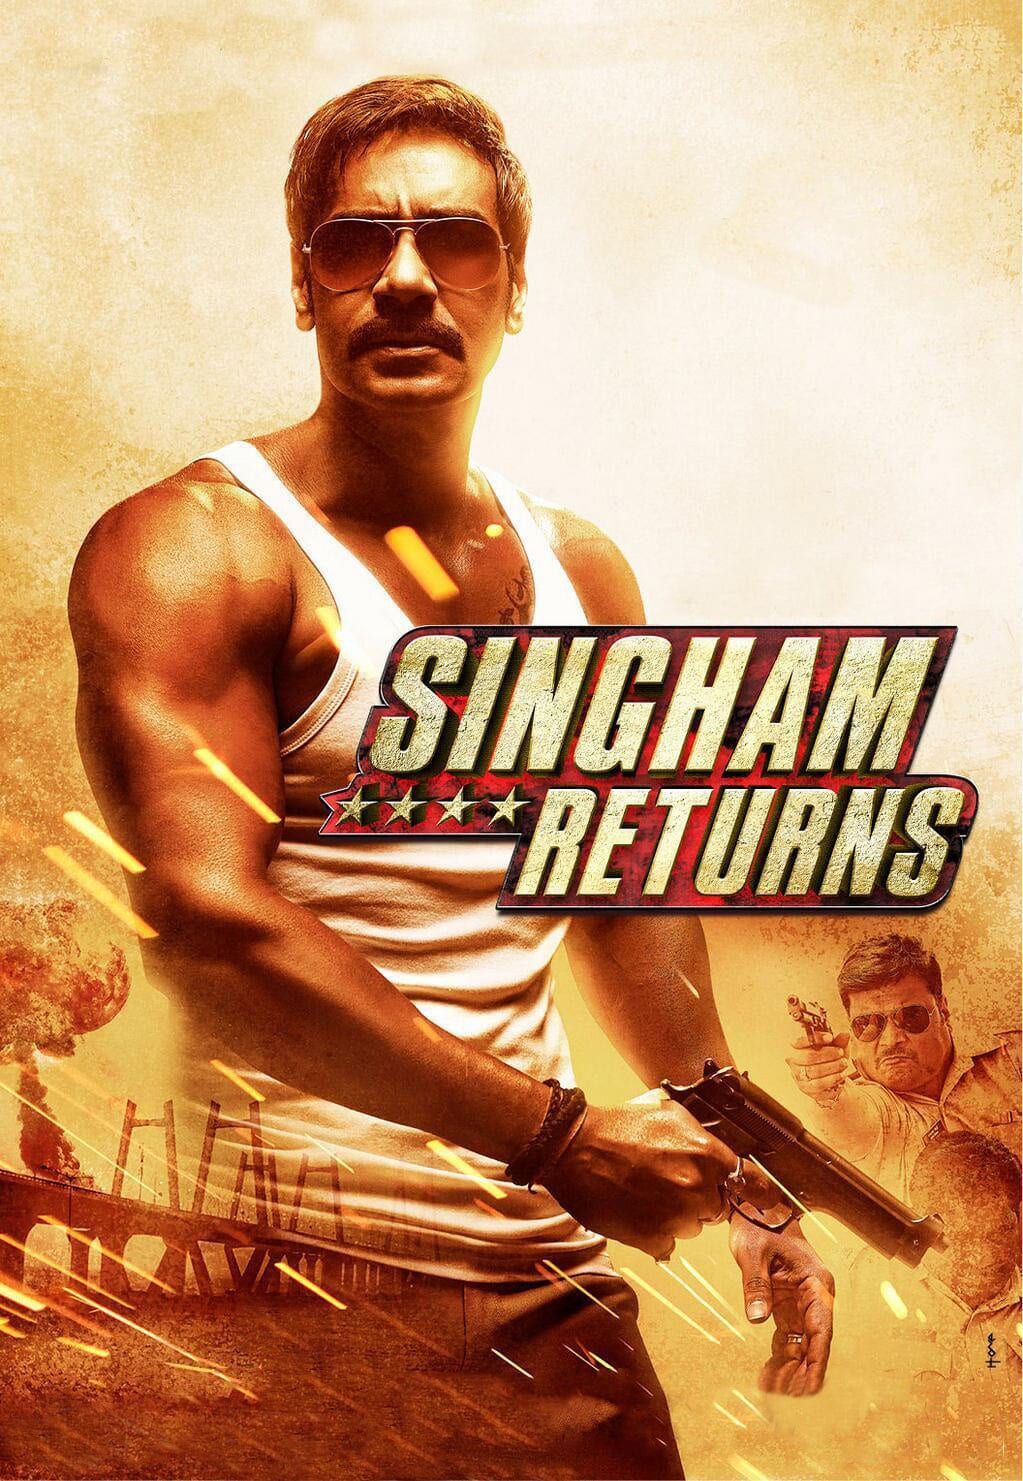 Poster for the movie "Singham Returns"